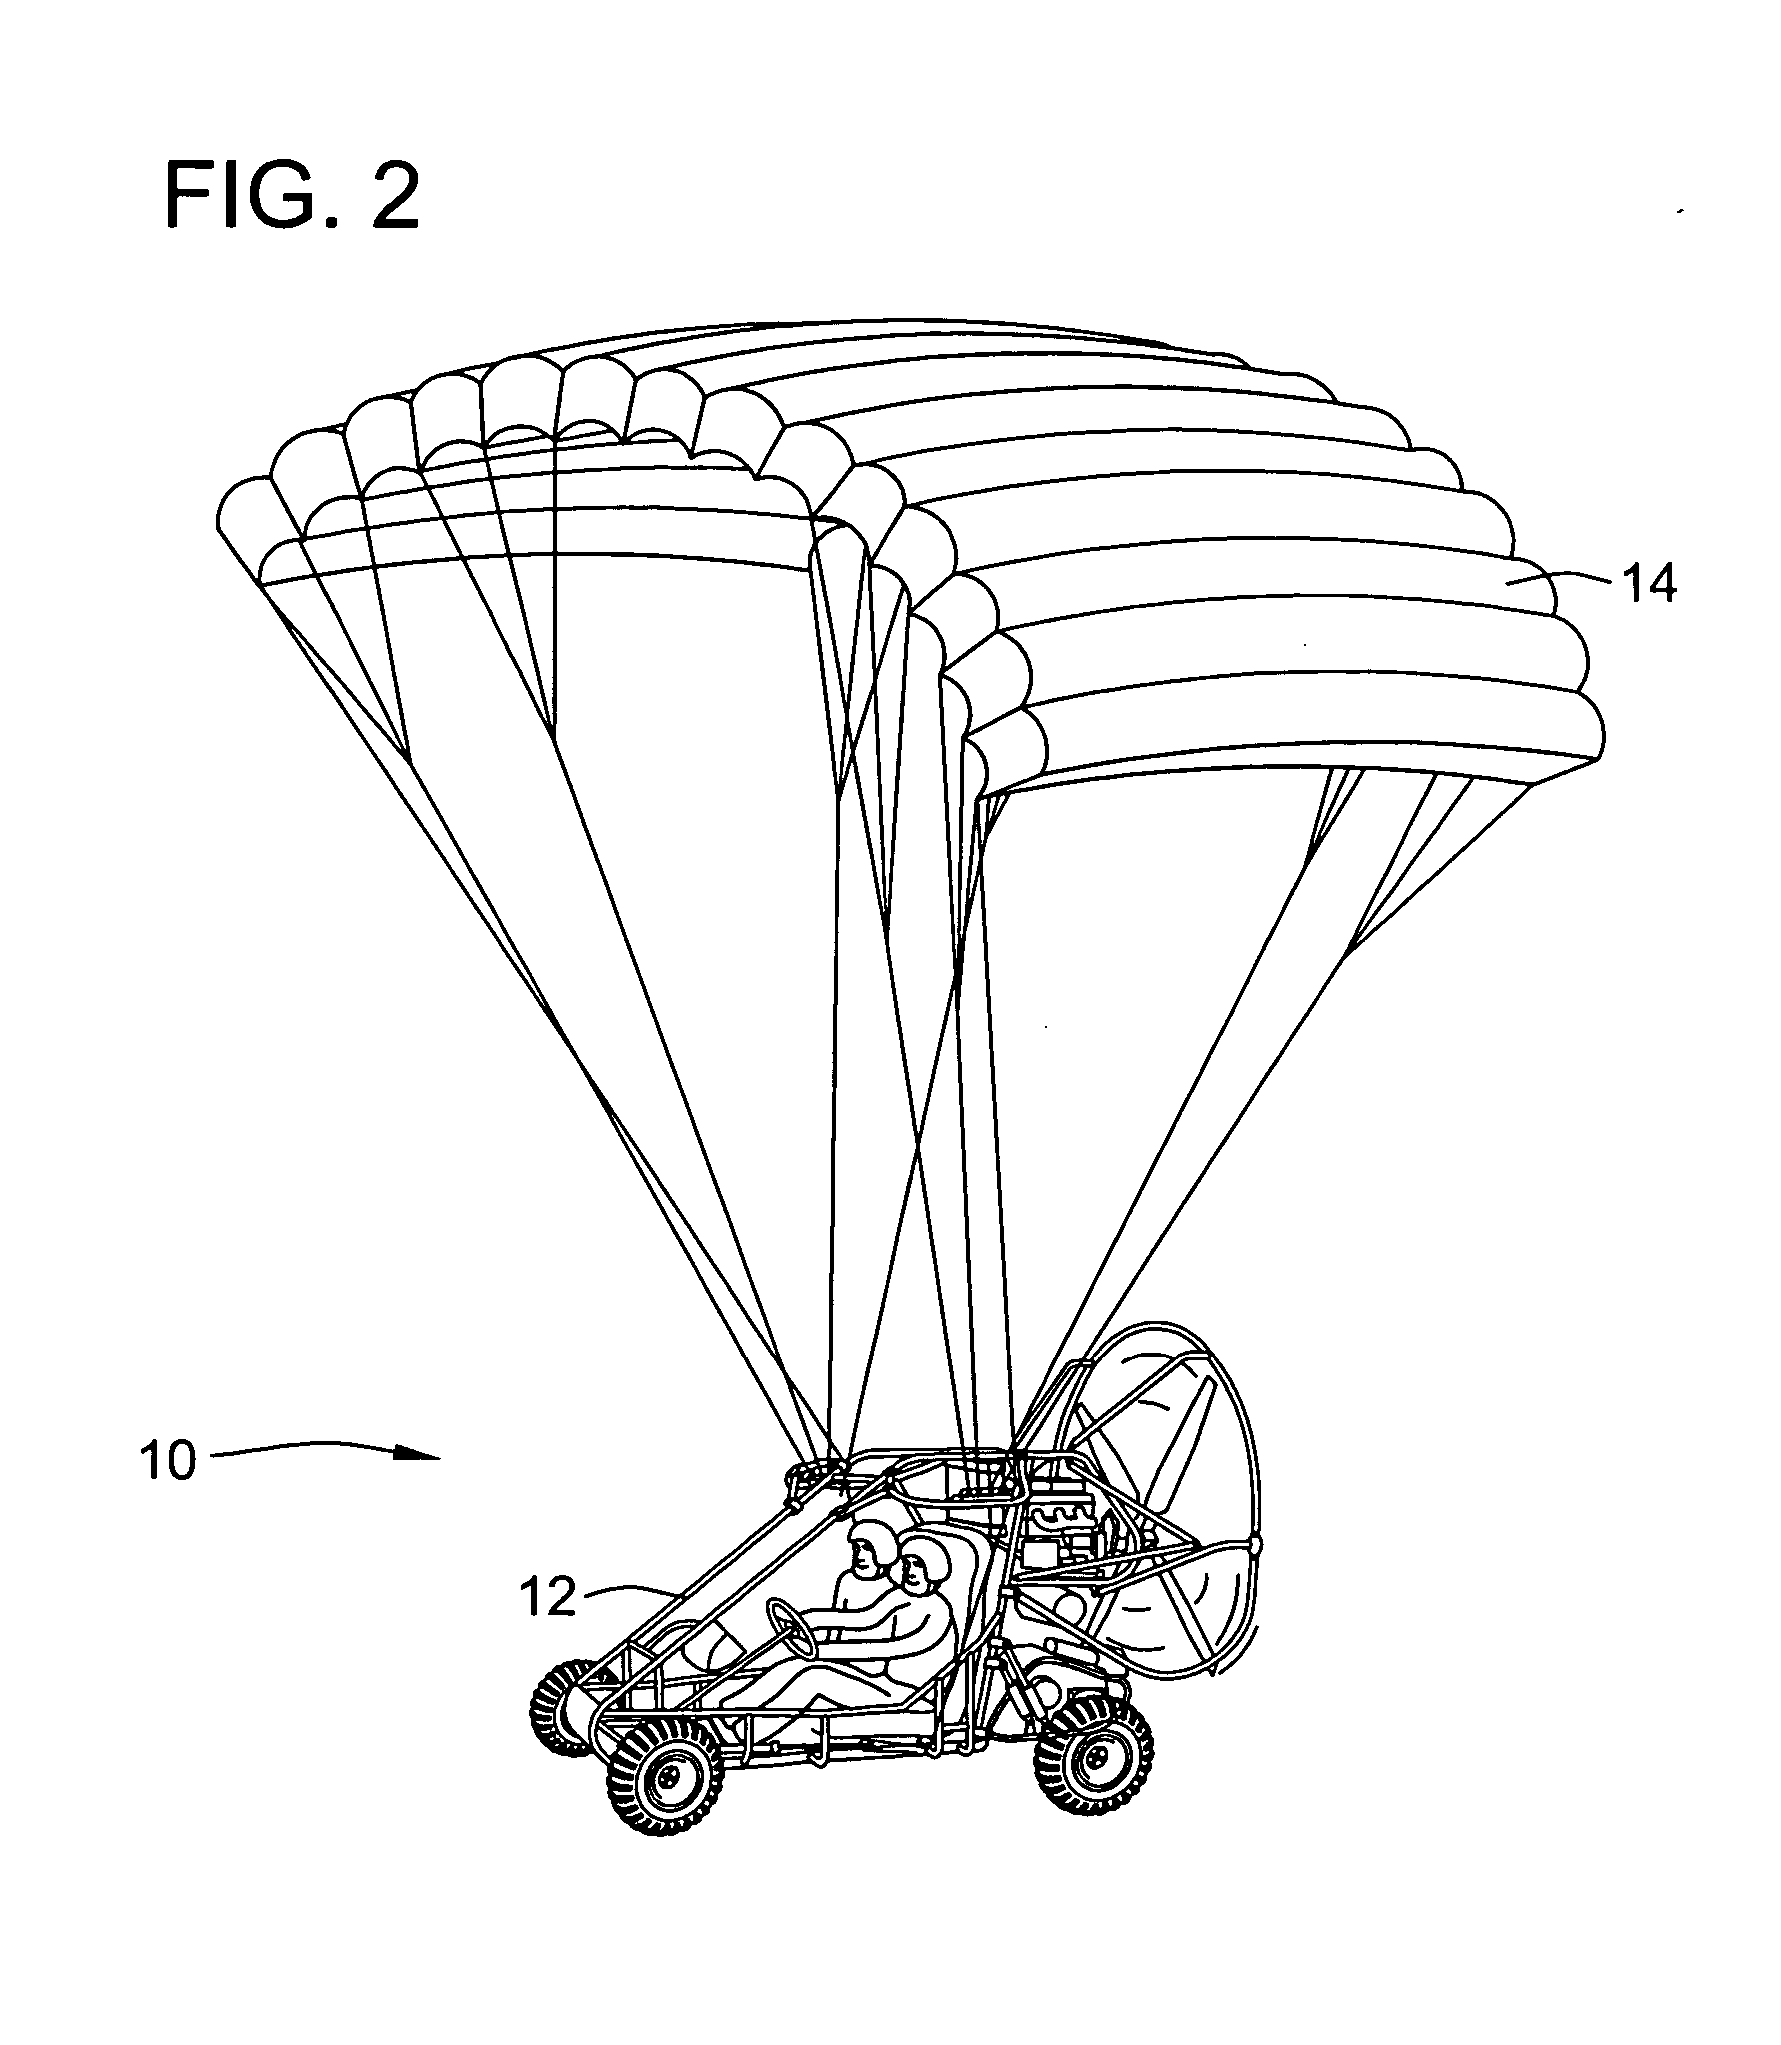 Flying all-terrain vehicle